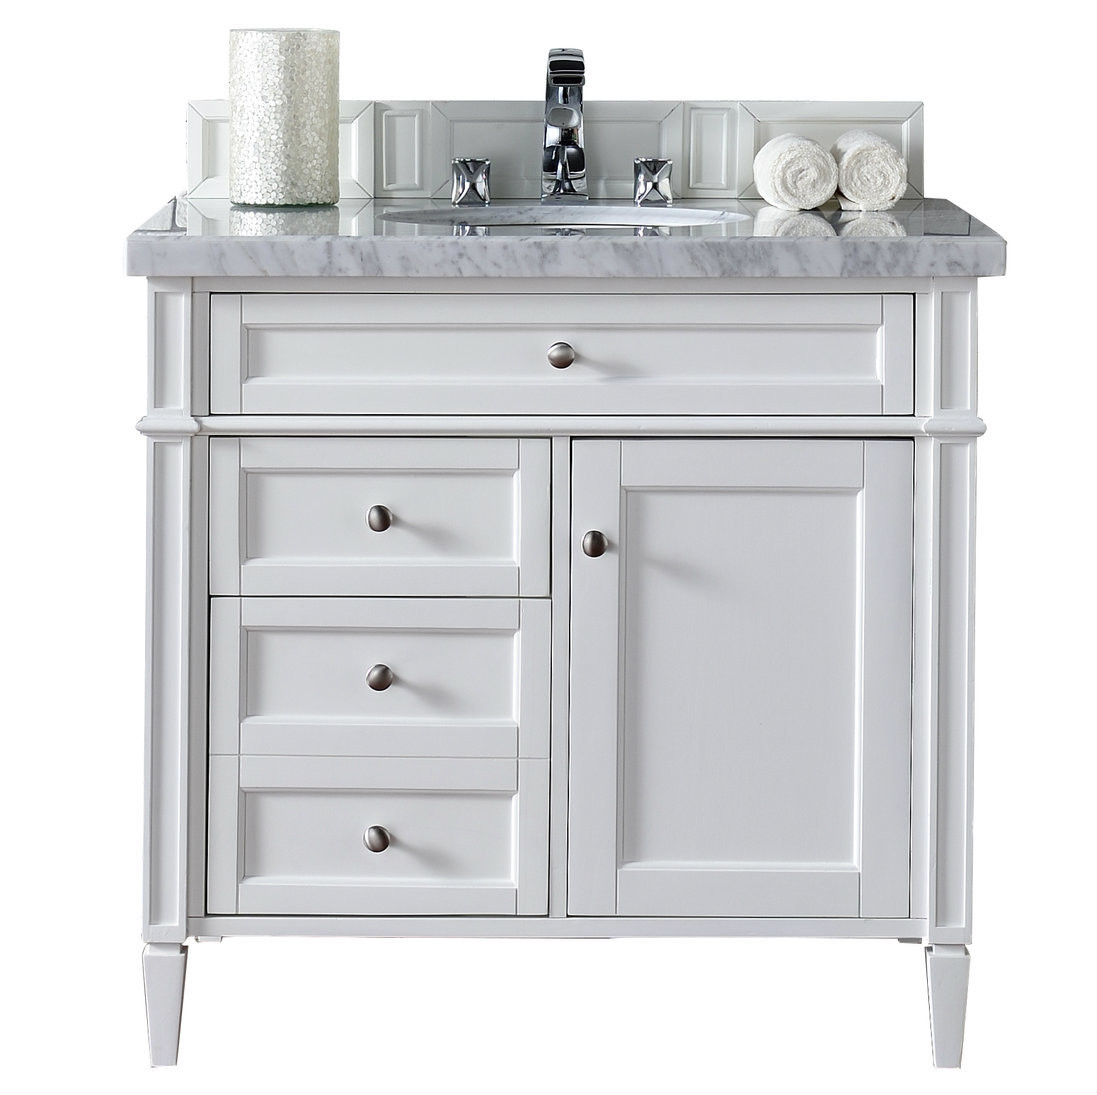 36 White Bathroom Vanity
 Perfect White Bathroom Vanity and Storage Cabinet Ideas